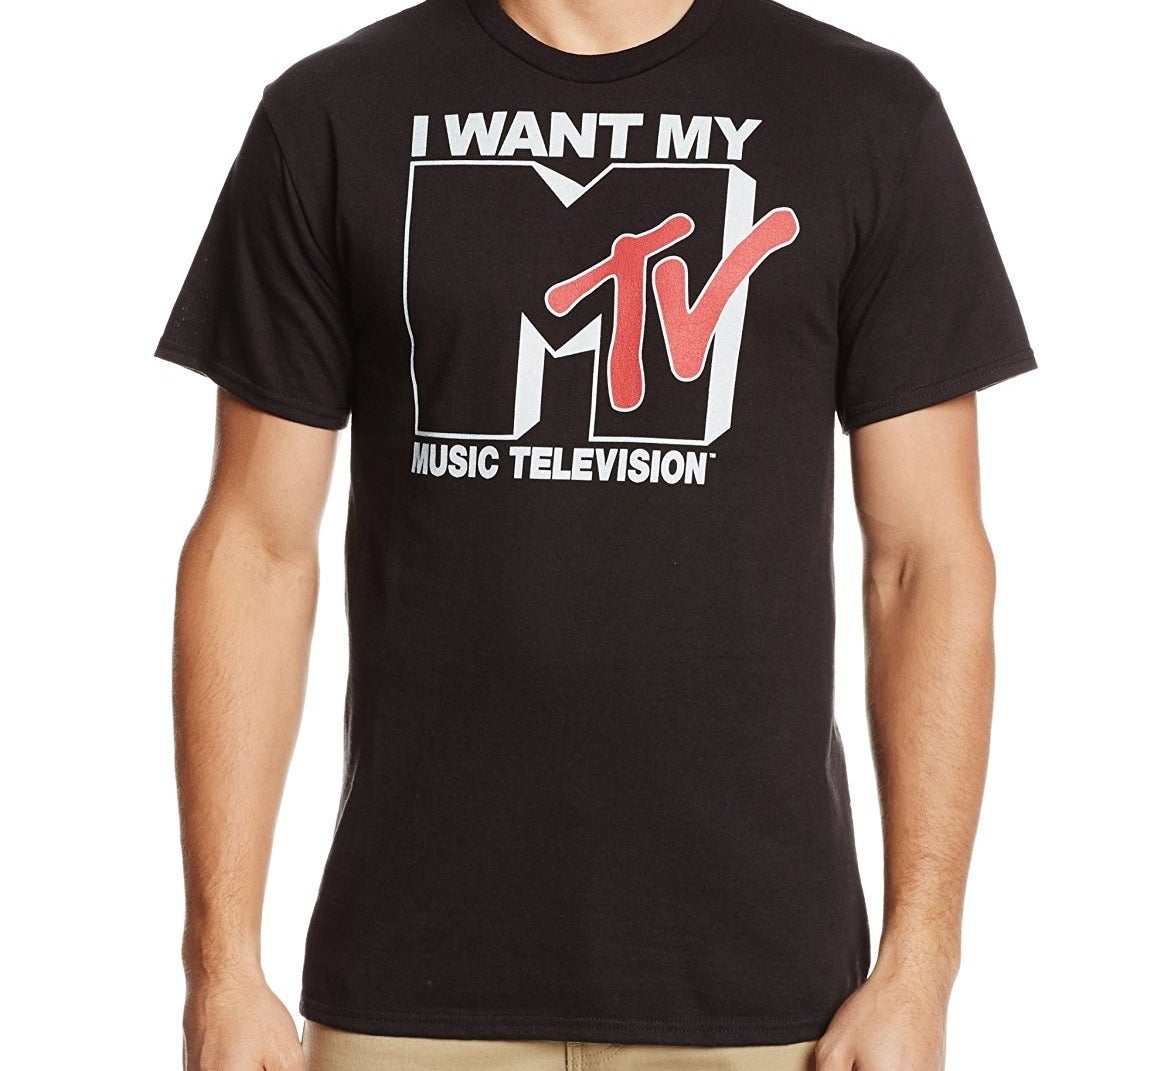 Through6 Shirtwascash - 90s Internet Kid Men's T-Shirt Standard / M